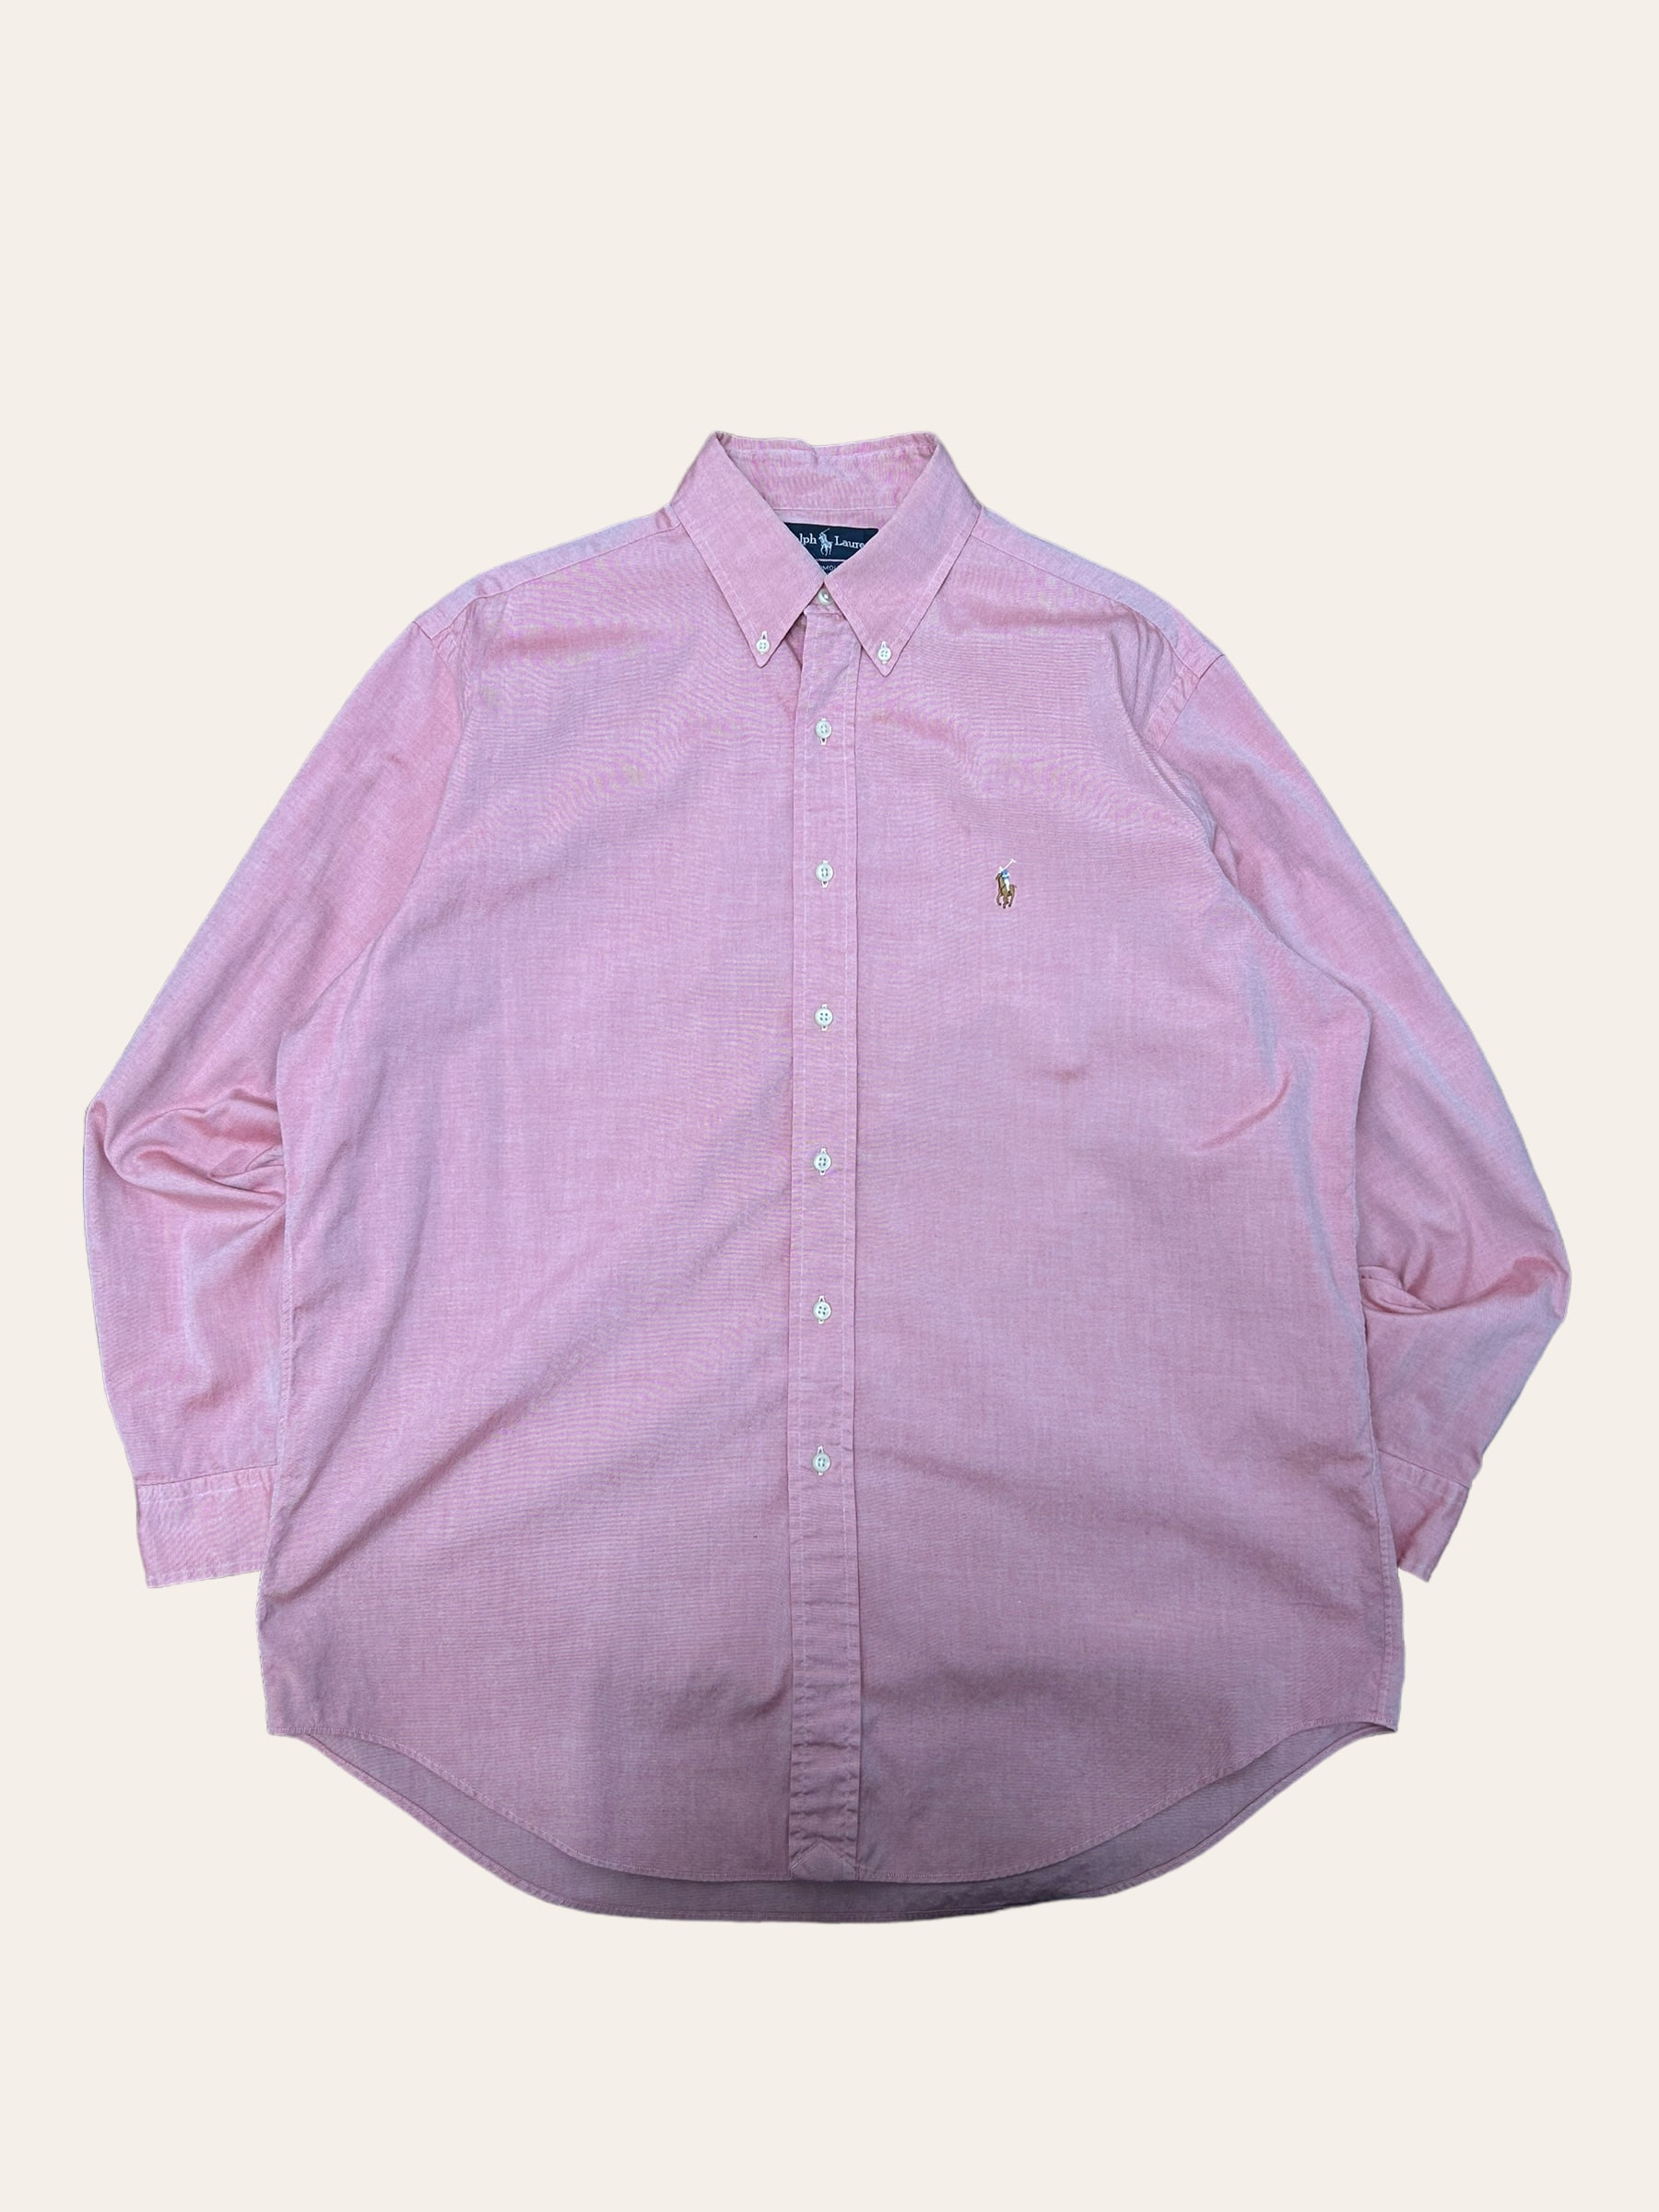 Polo ralph lauren pink color oxford shirt 16.5